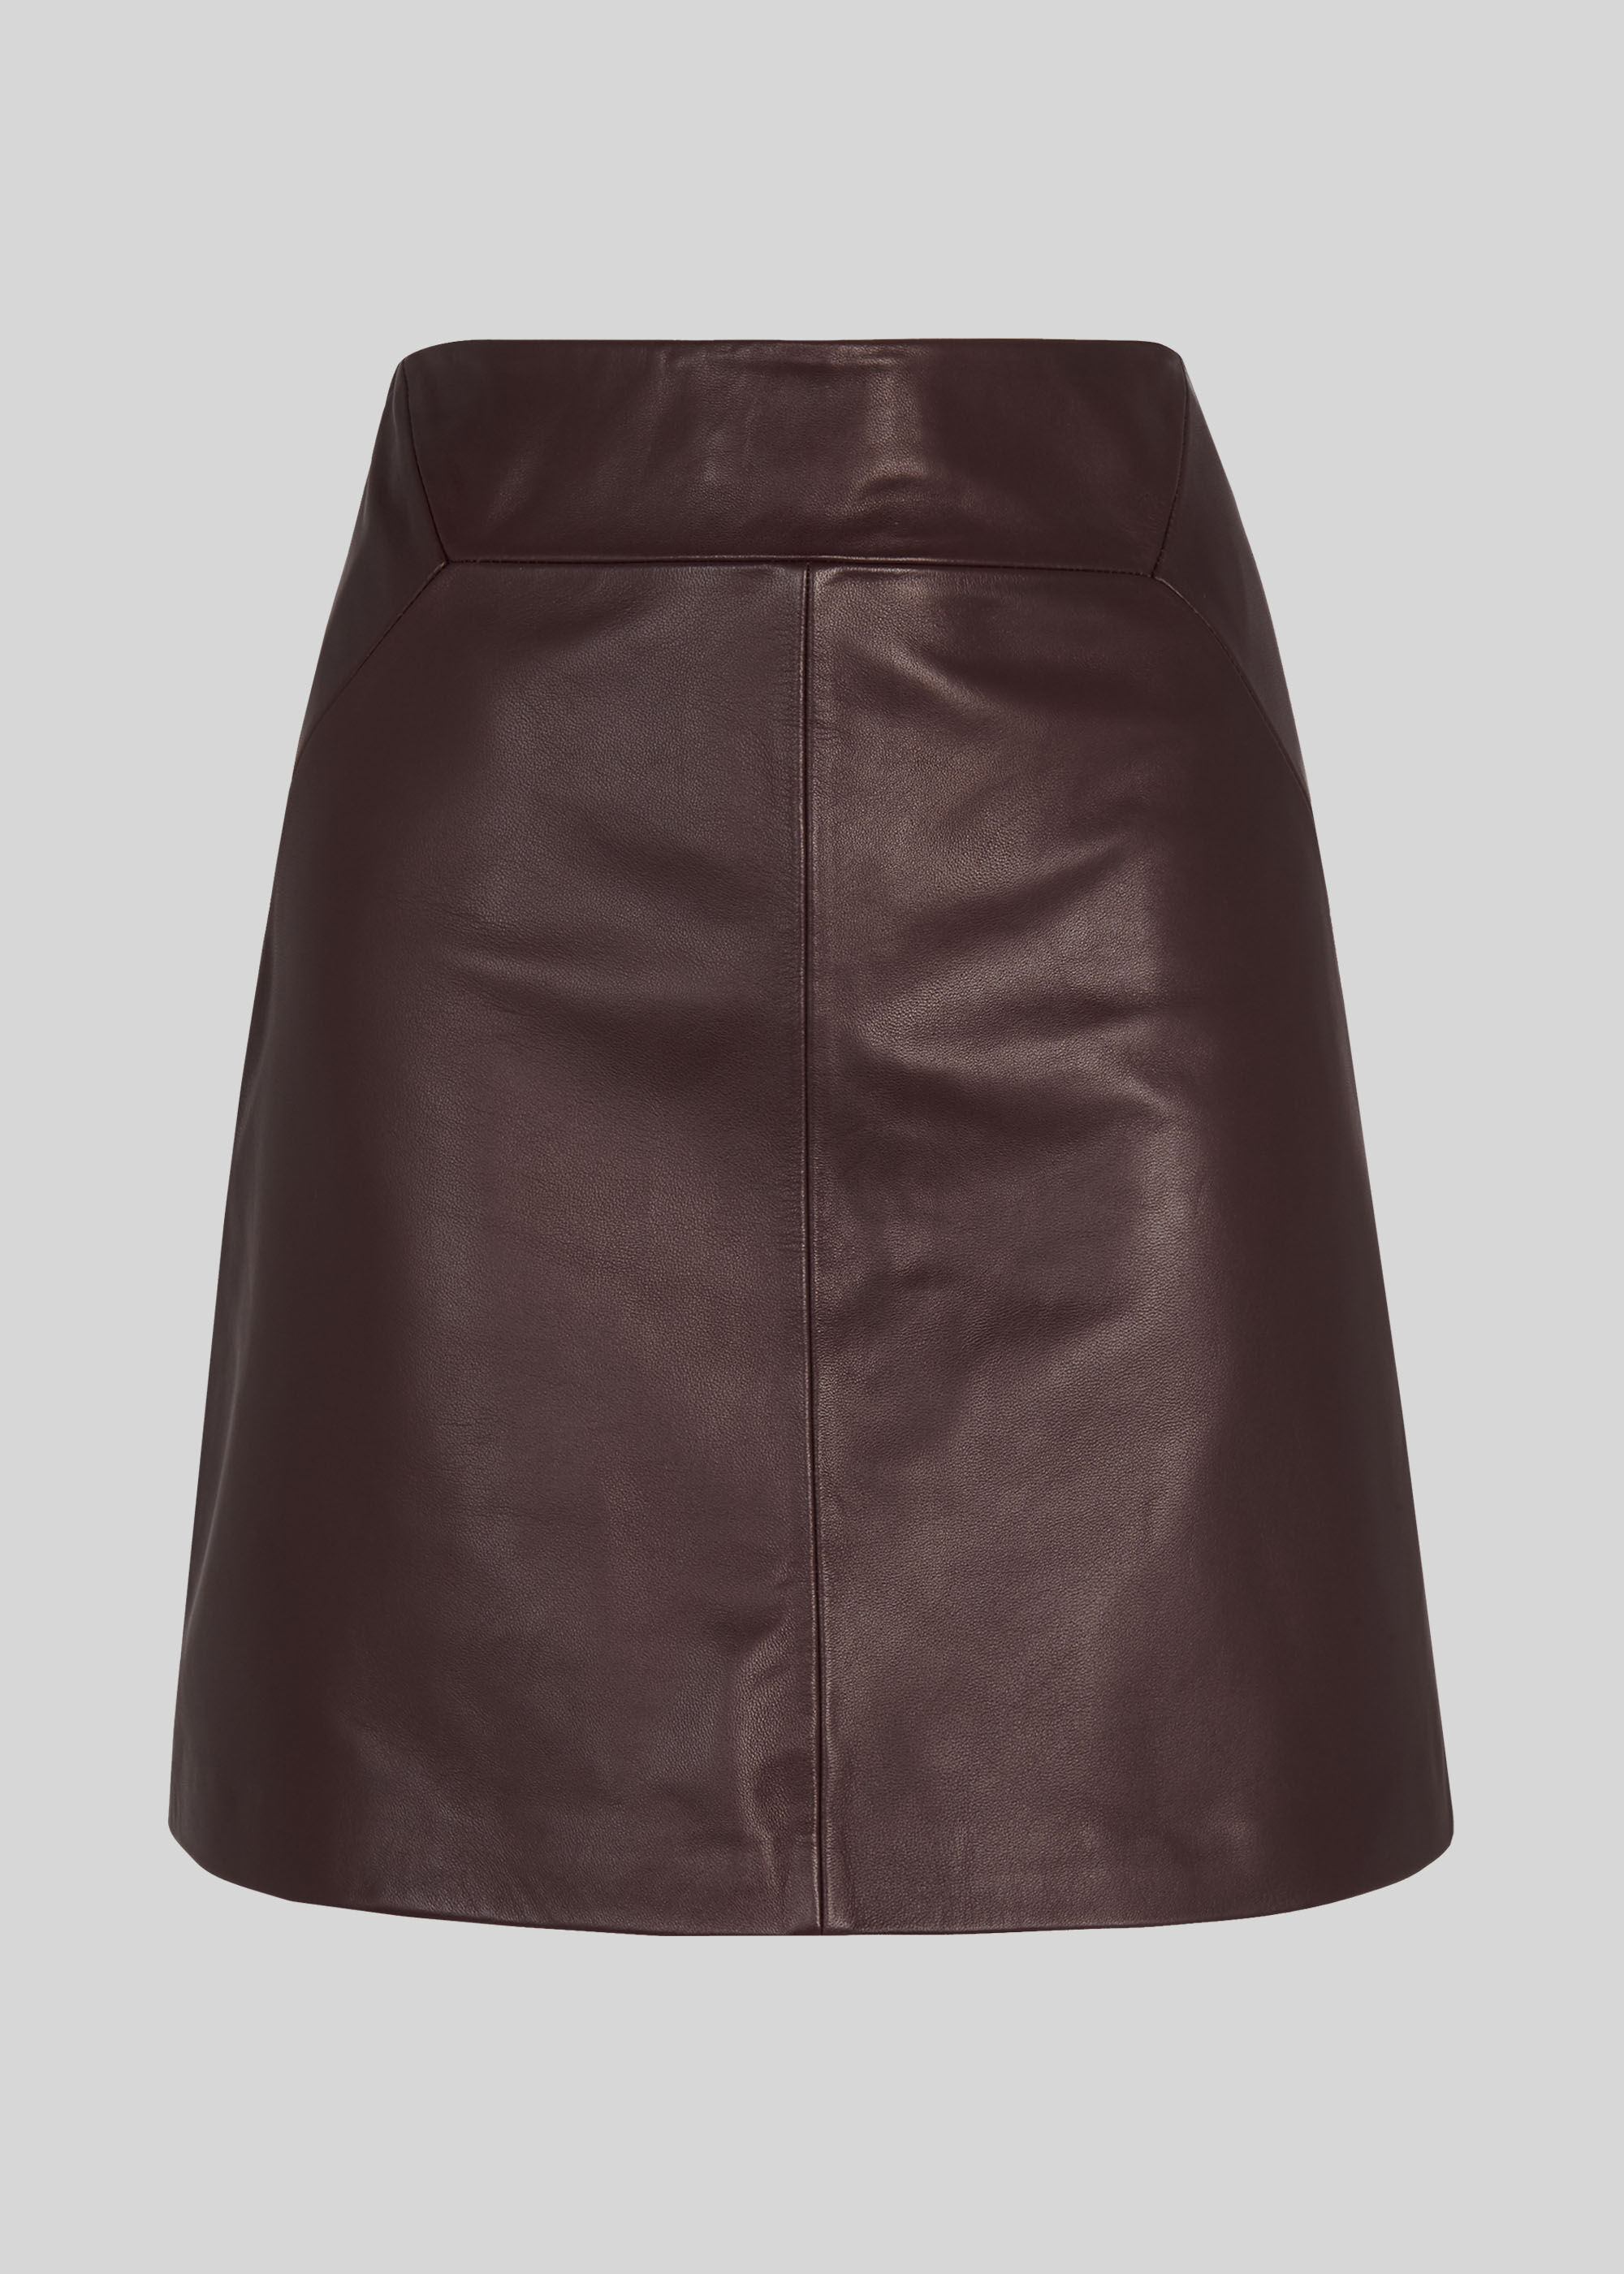 burgundy red leather skirt